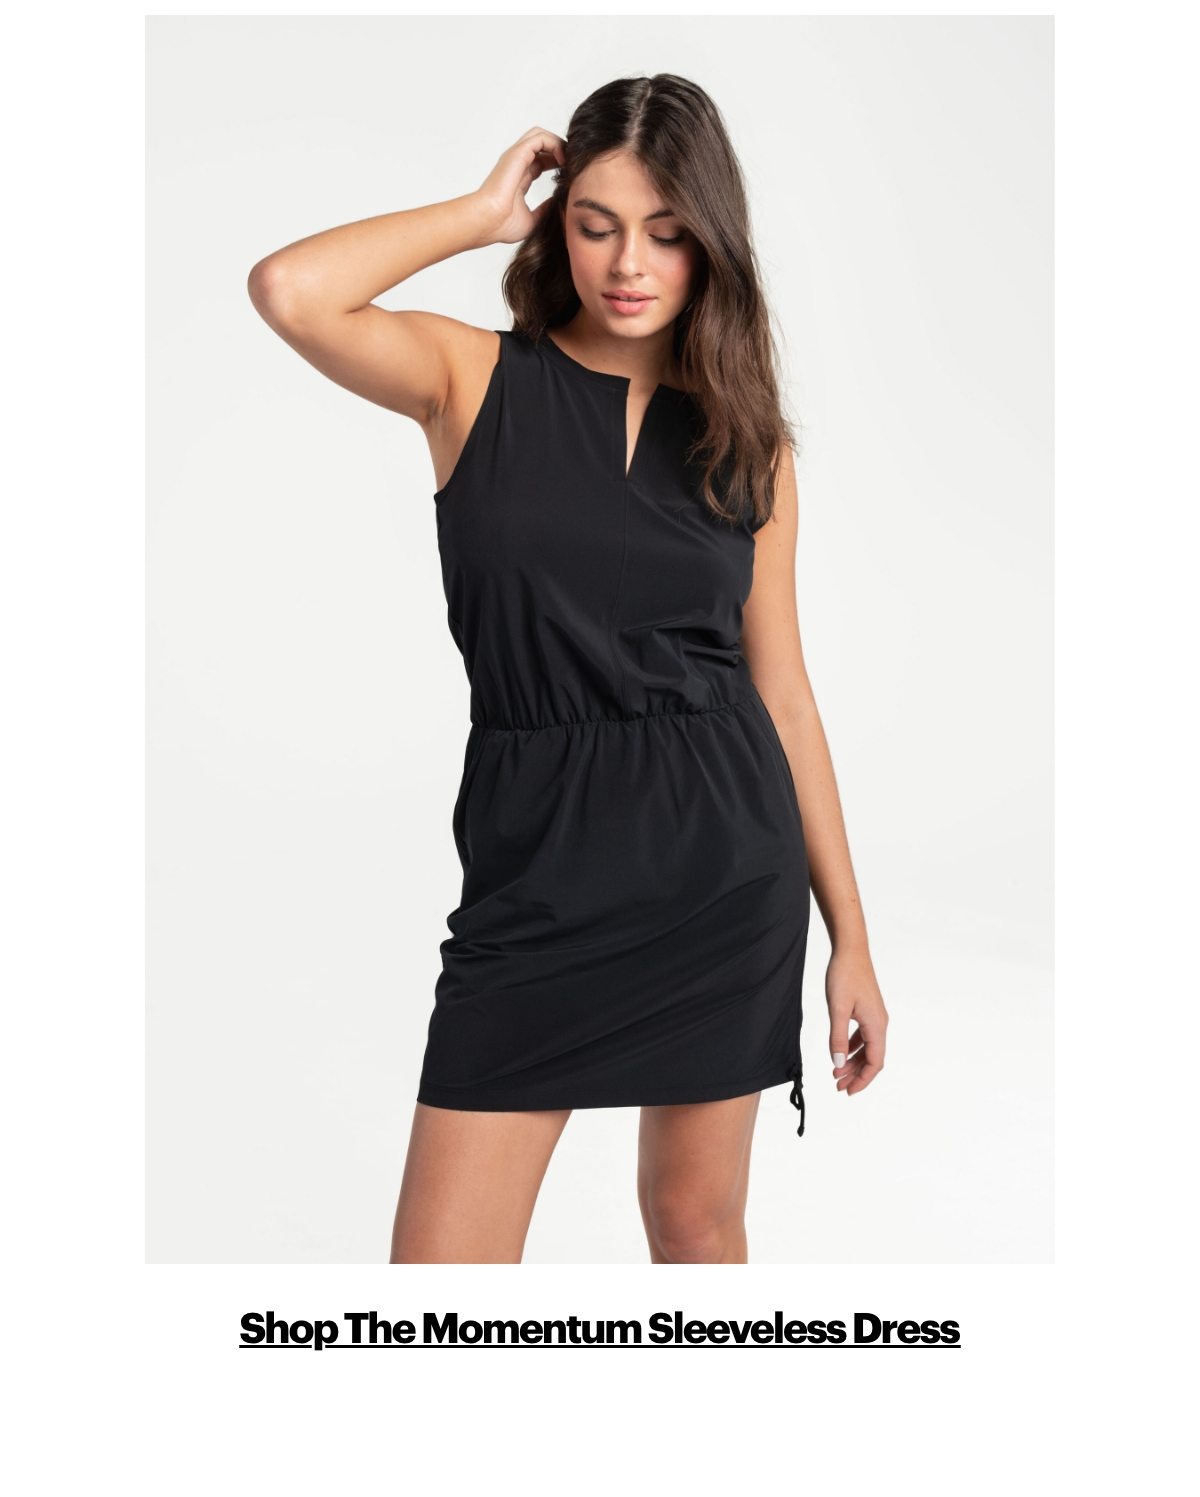 Momentum Sleeveless Dress - Black Beauty